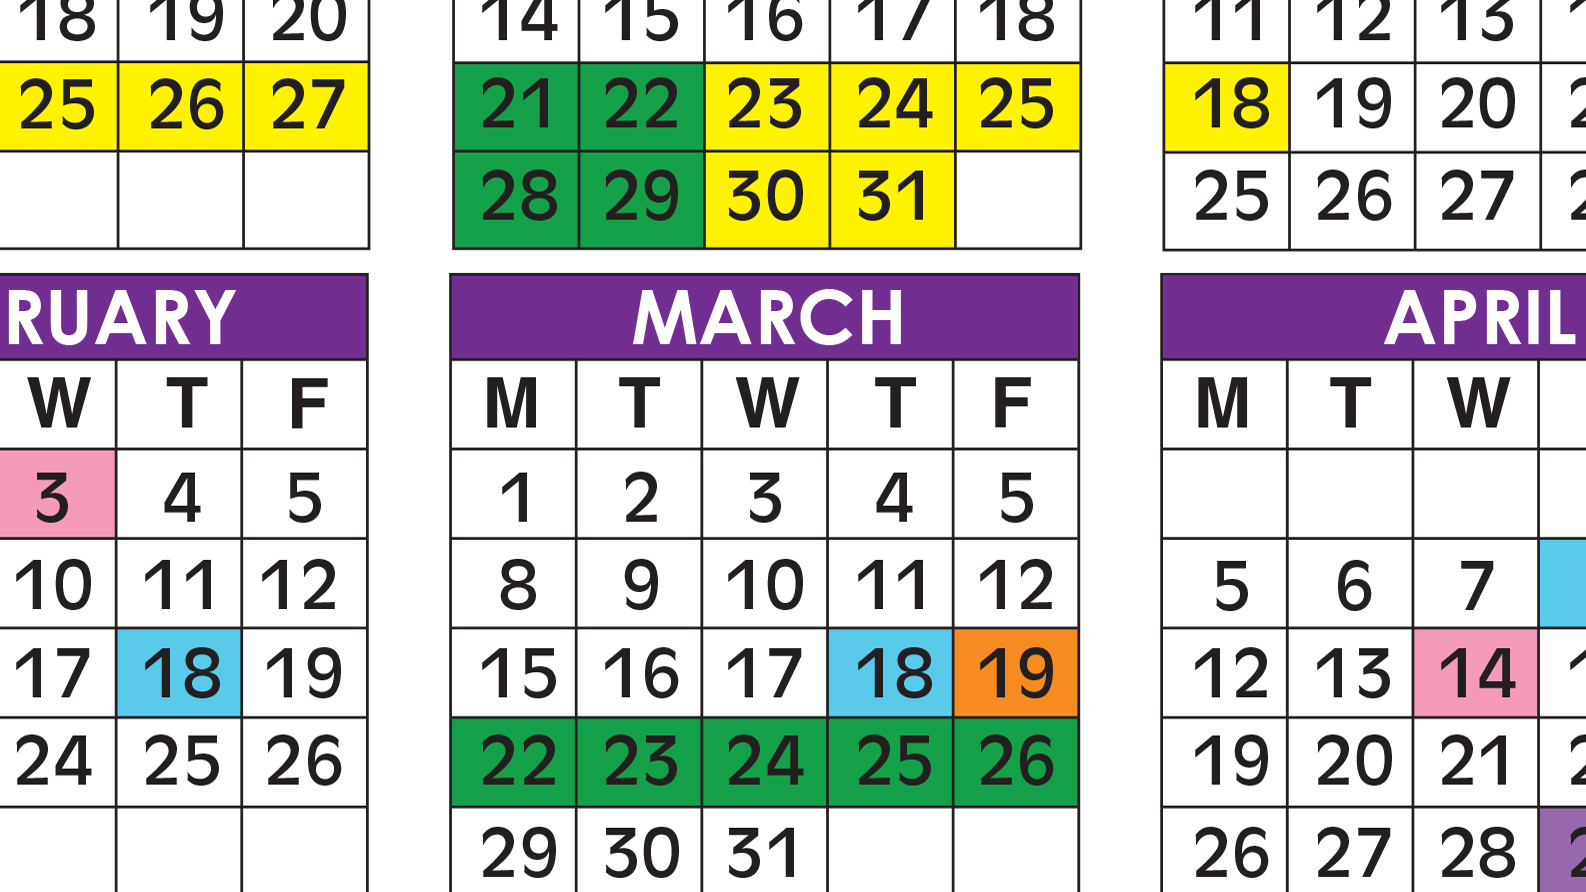 Broward County School Calendar 2021-2022 Official 2020/21 Broward County Public Schools Color Calendar 